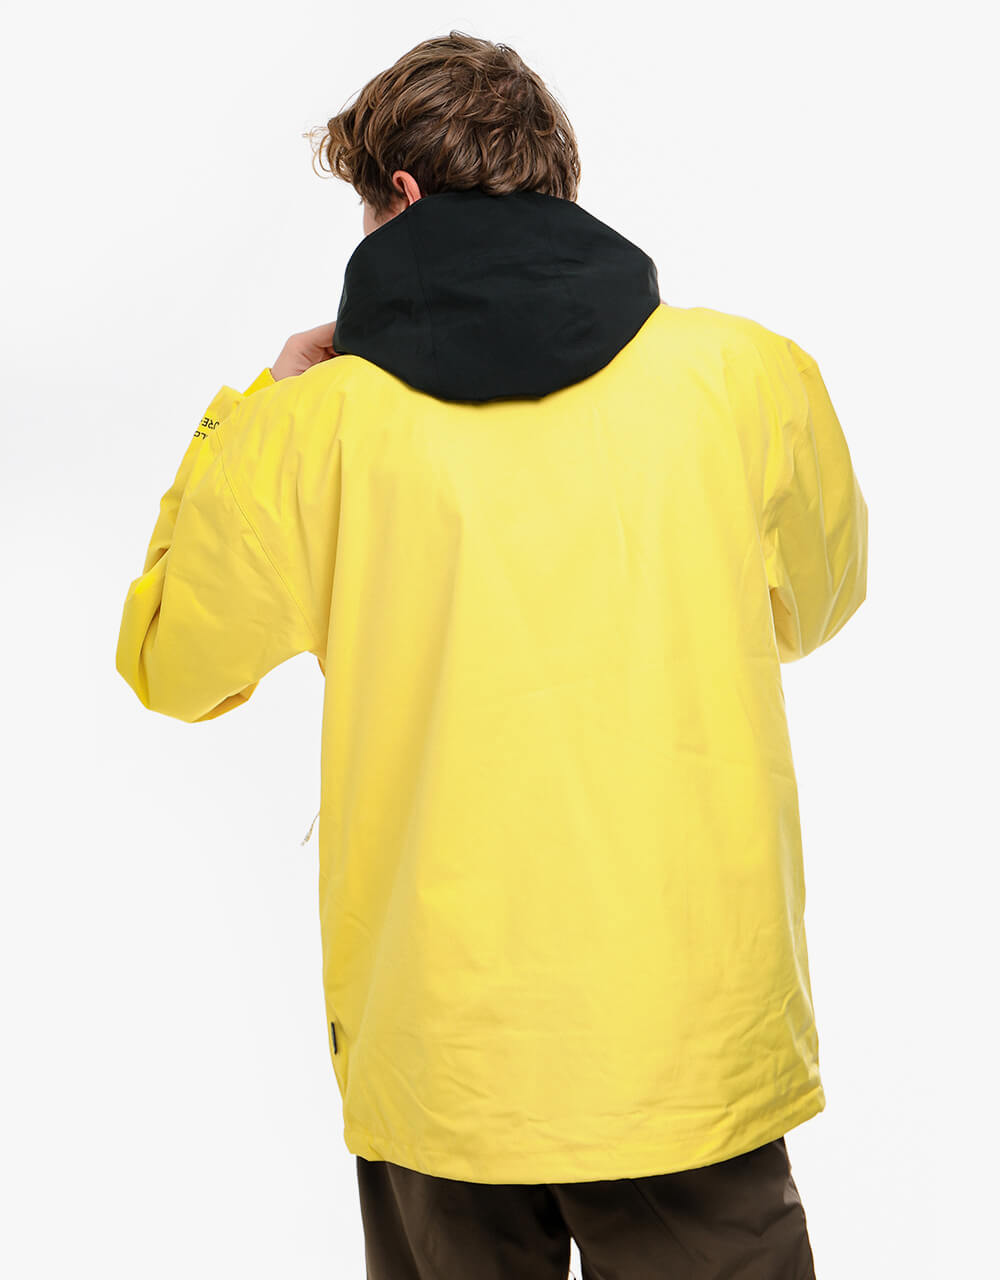 Volcom Longo GORE-TEX® Snowboard Jacket - Faded Lemon